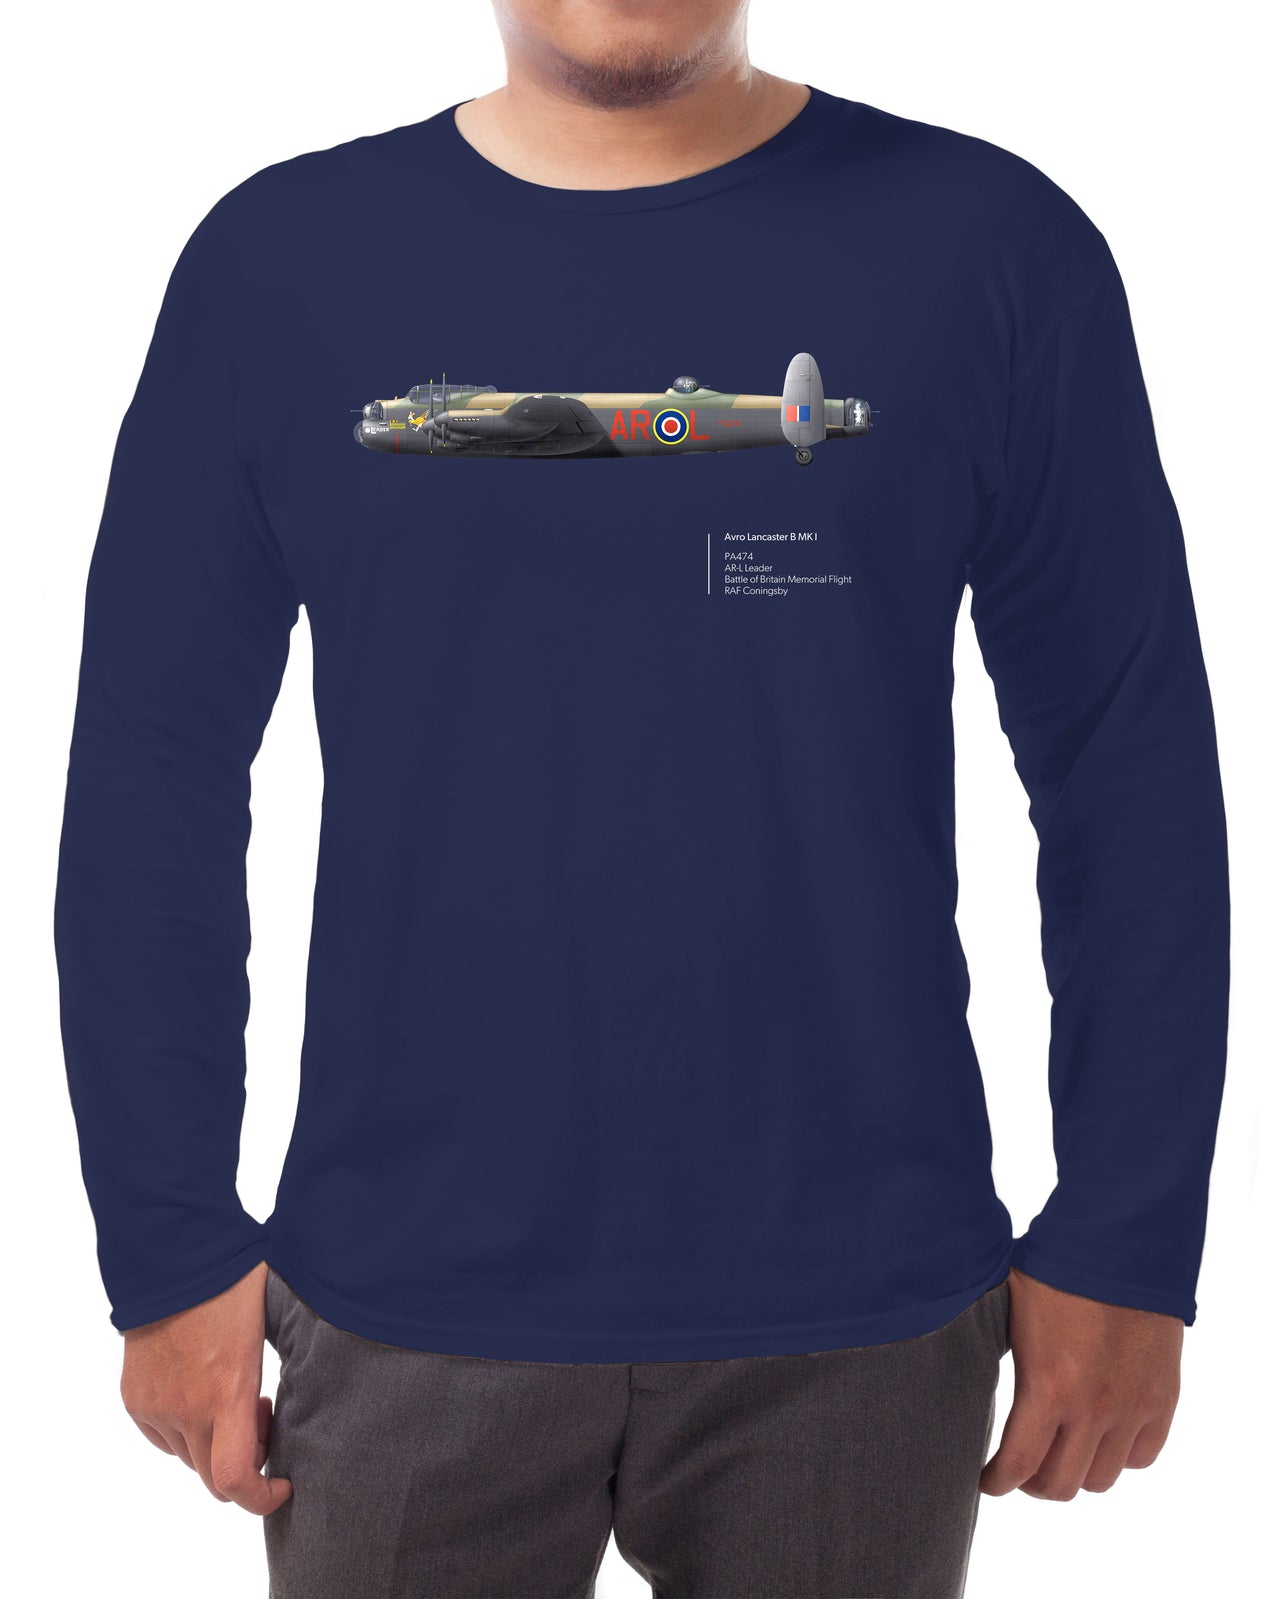 BBMF Avro Lancaster - Long-sleeve T-shirt